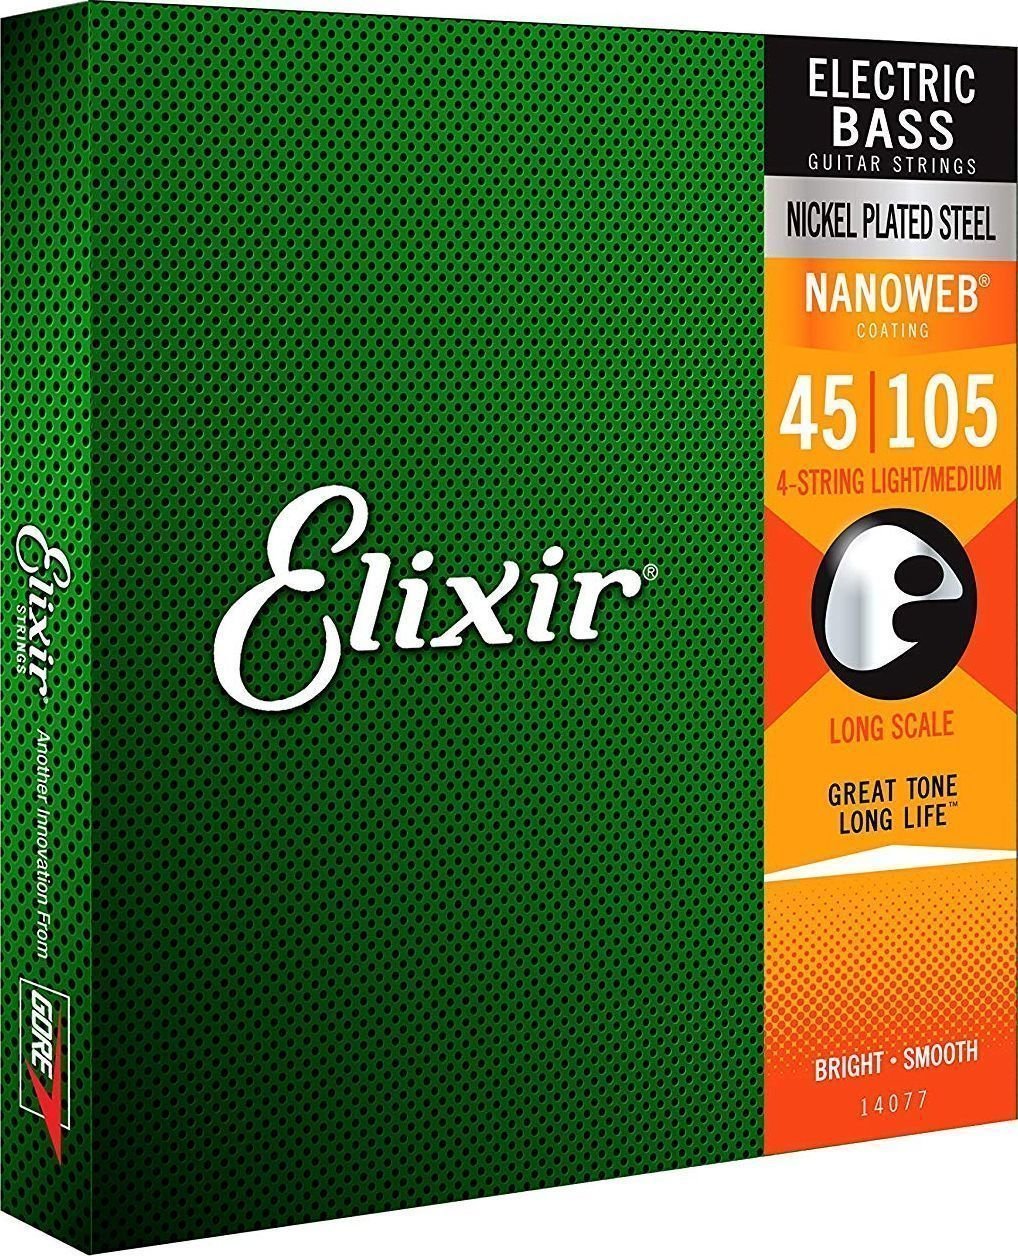 Bassguitar strings Elixir 14077 Bass Nanoweb